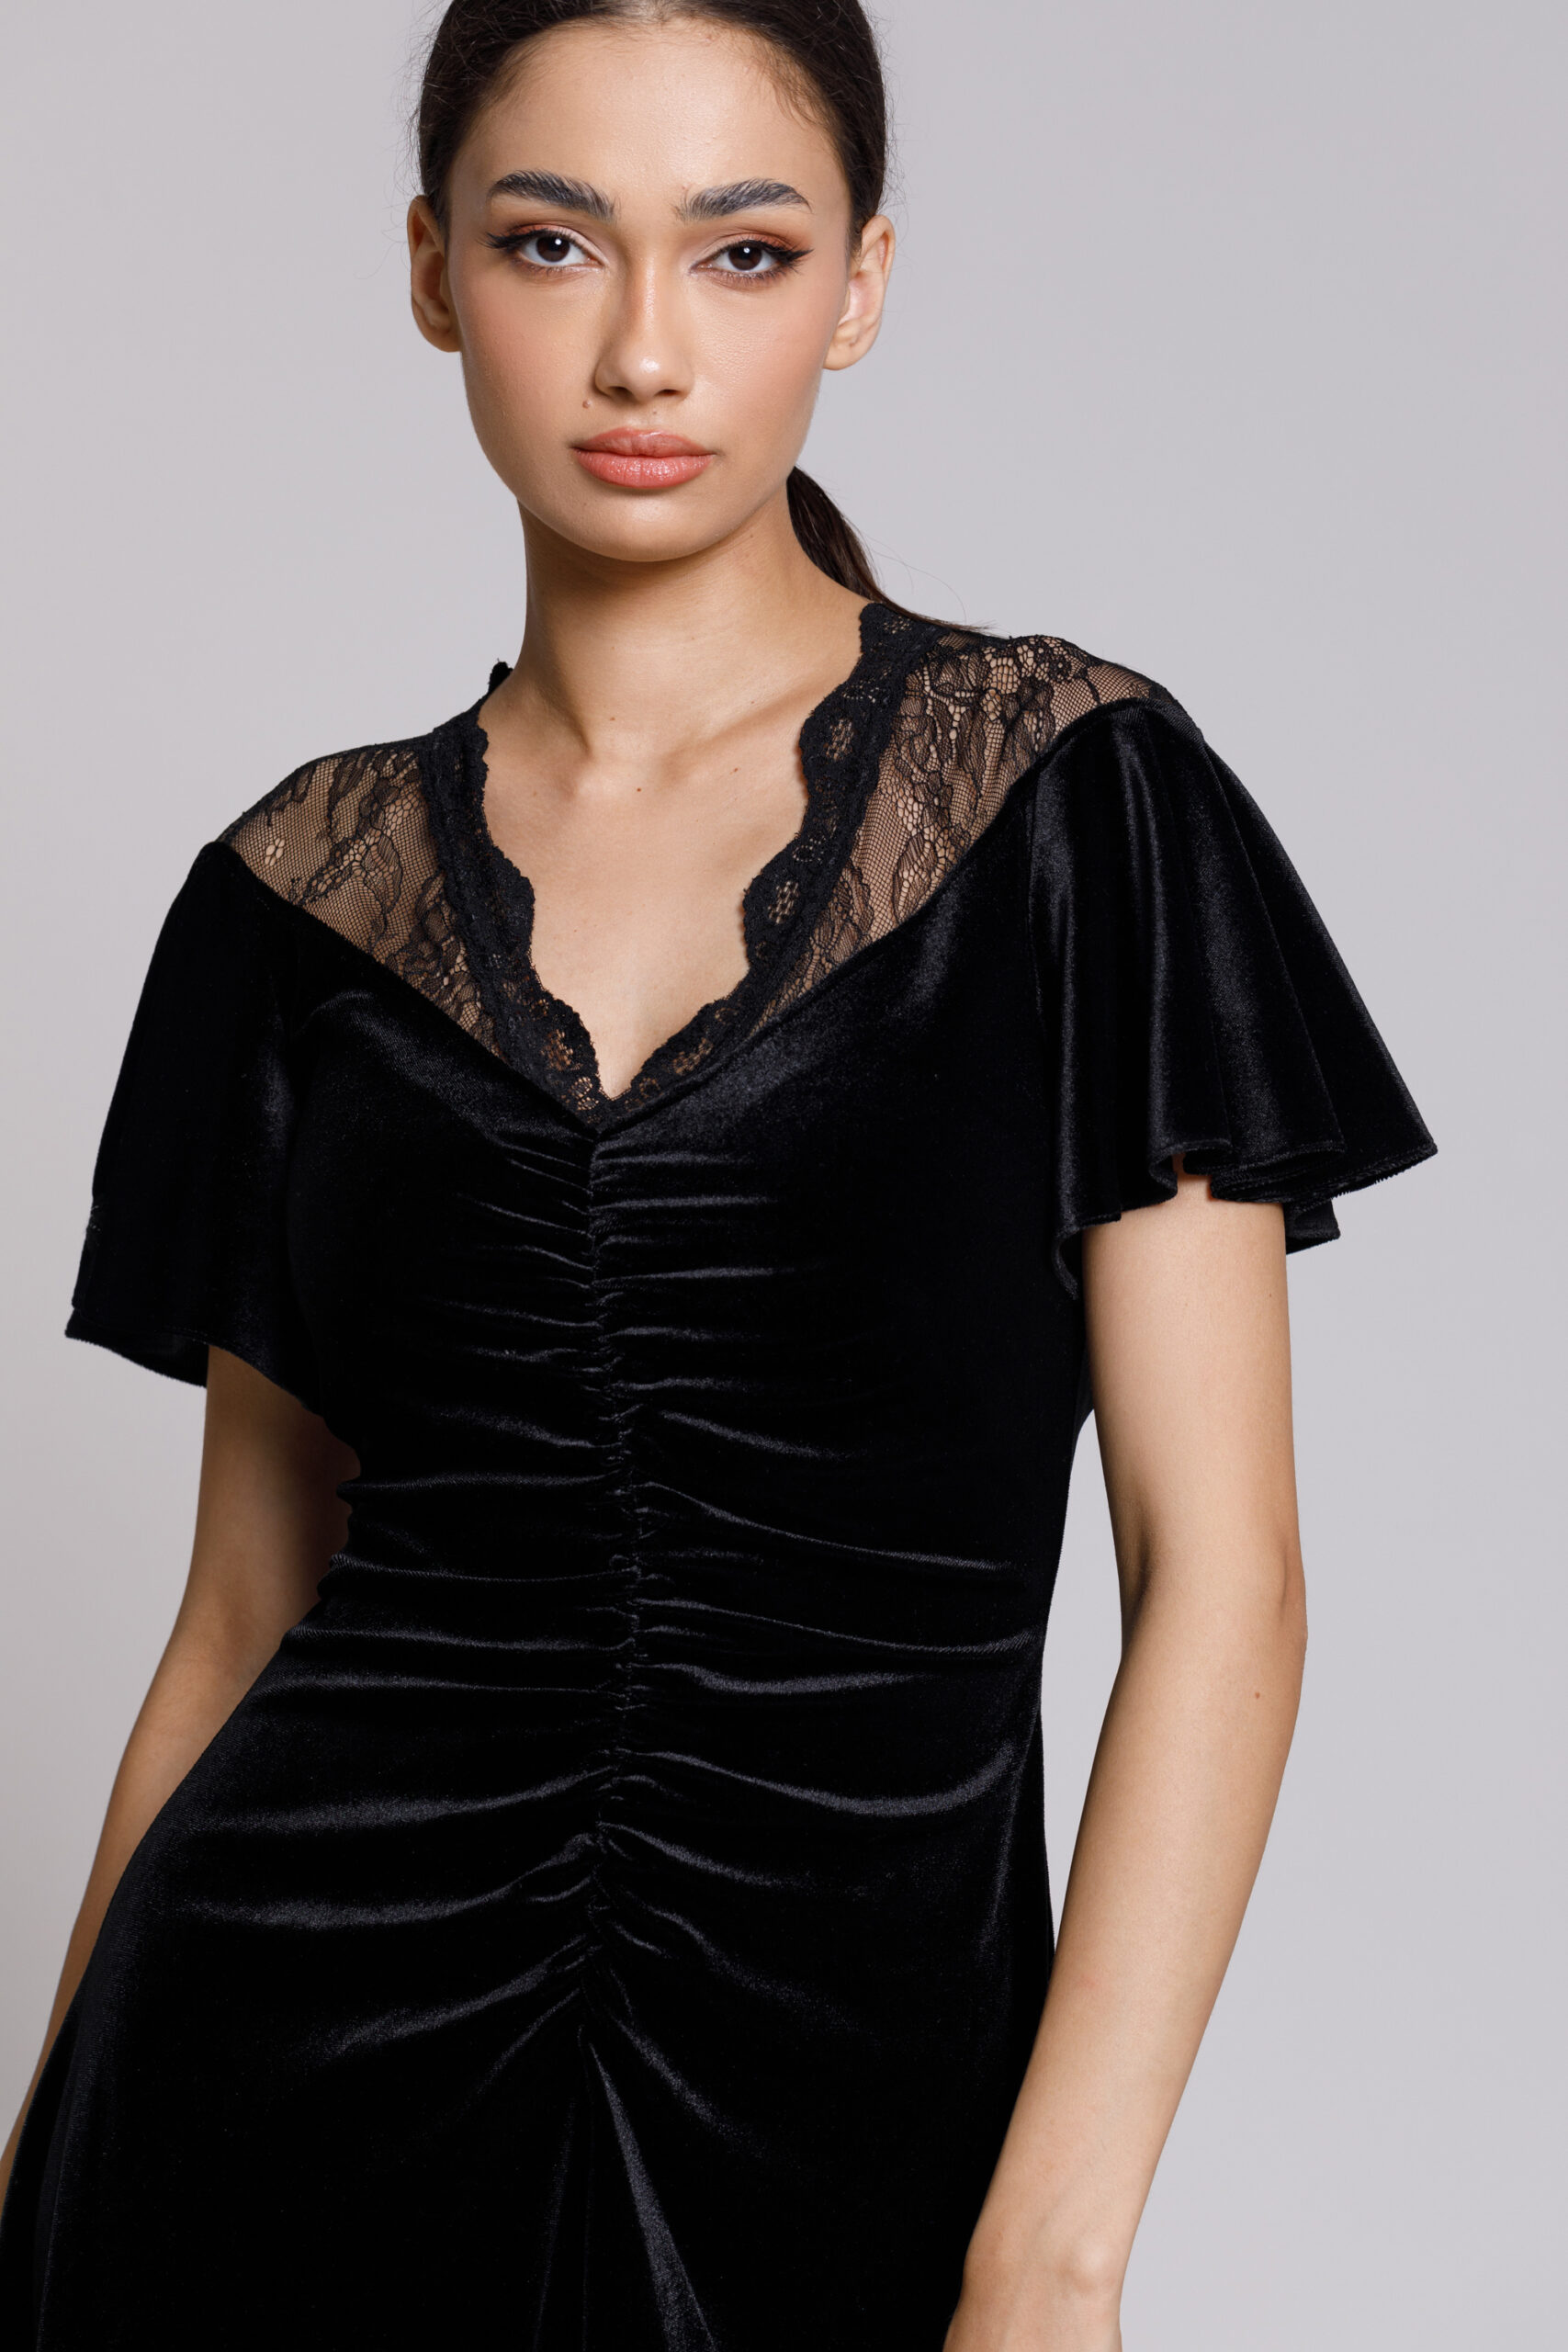 SERENY delicate black velvet and lace dress. Natural fabrics, original design, handmade embroidery